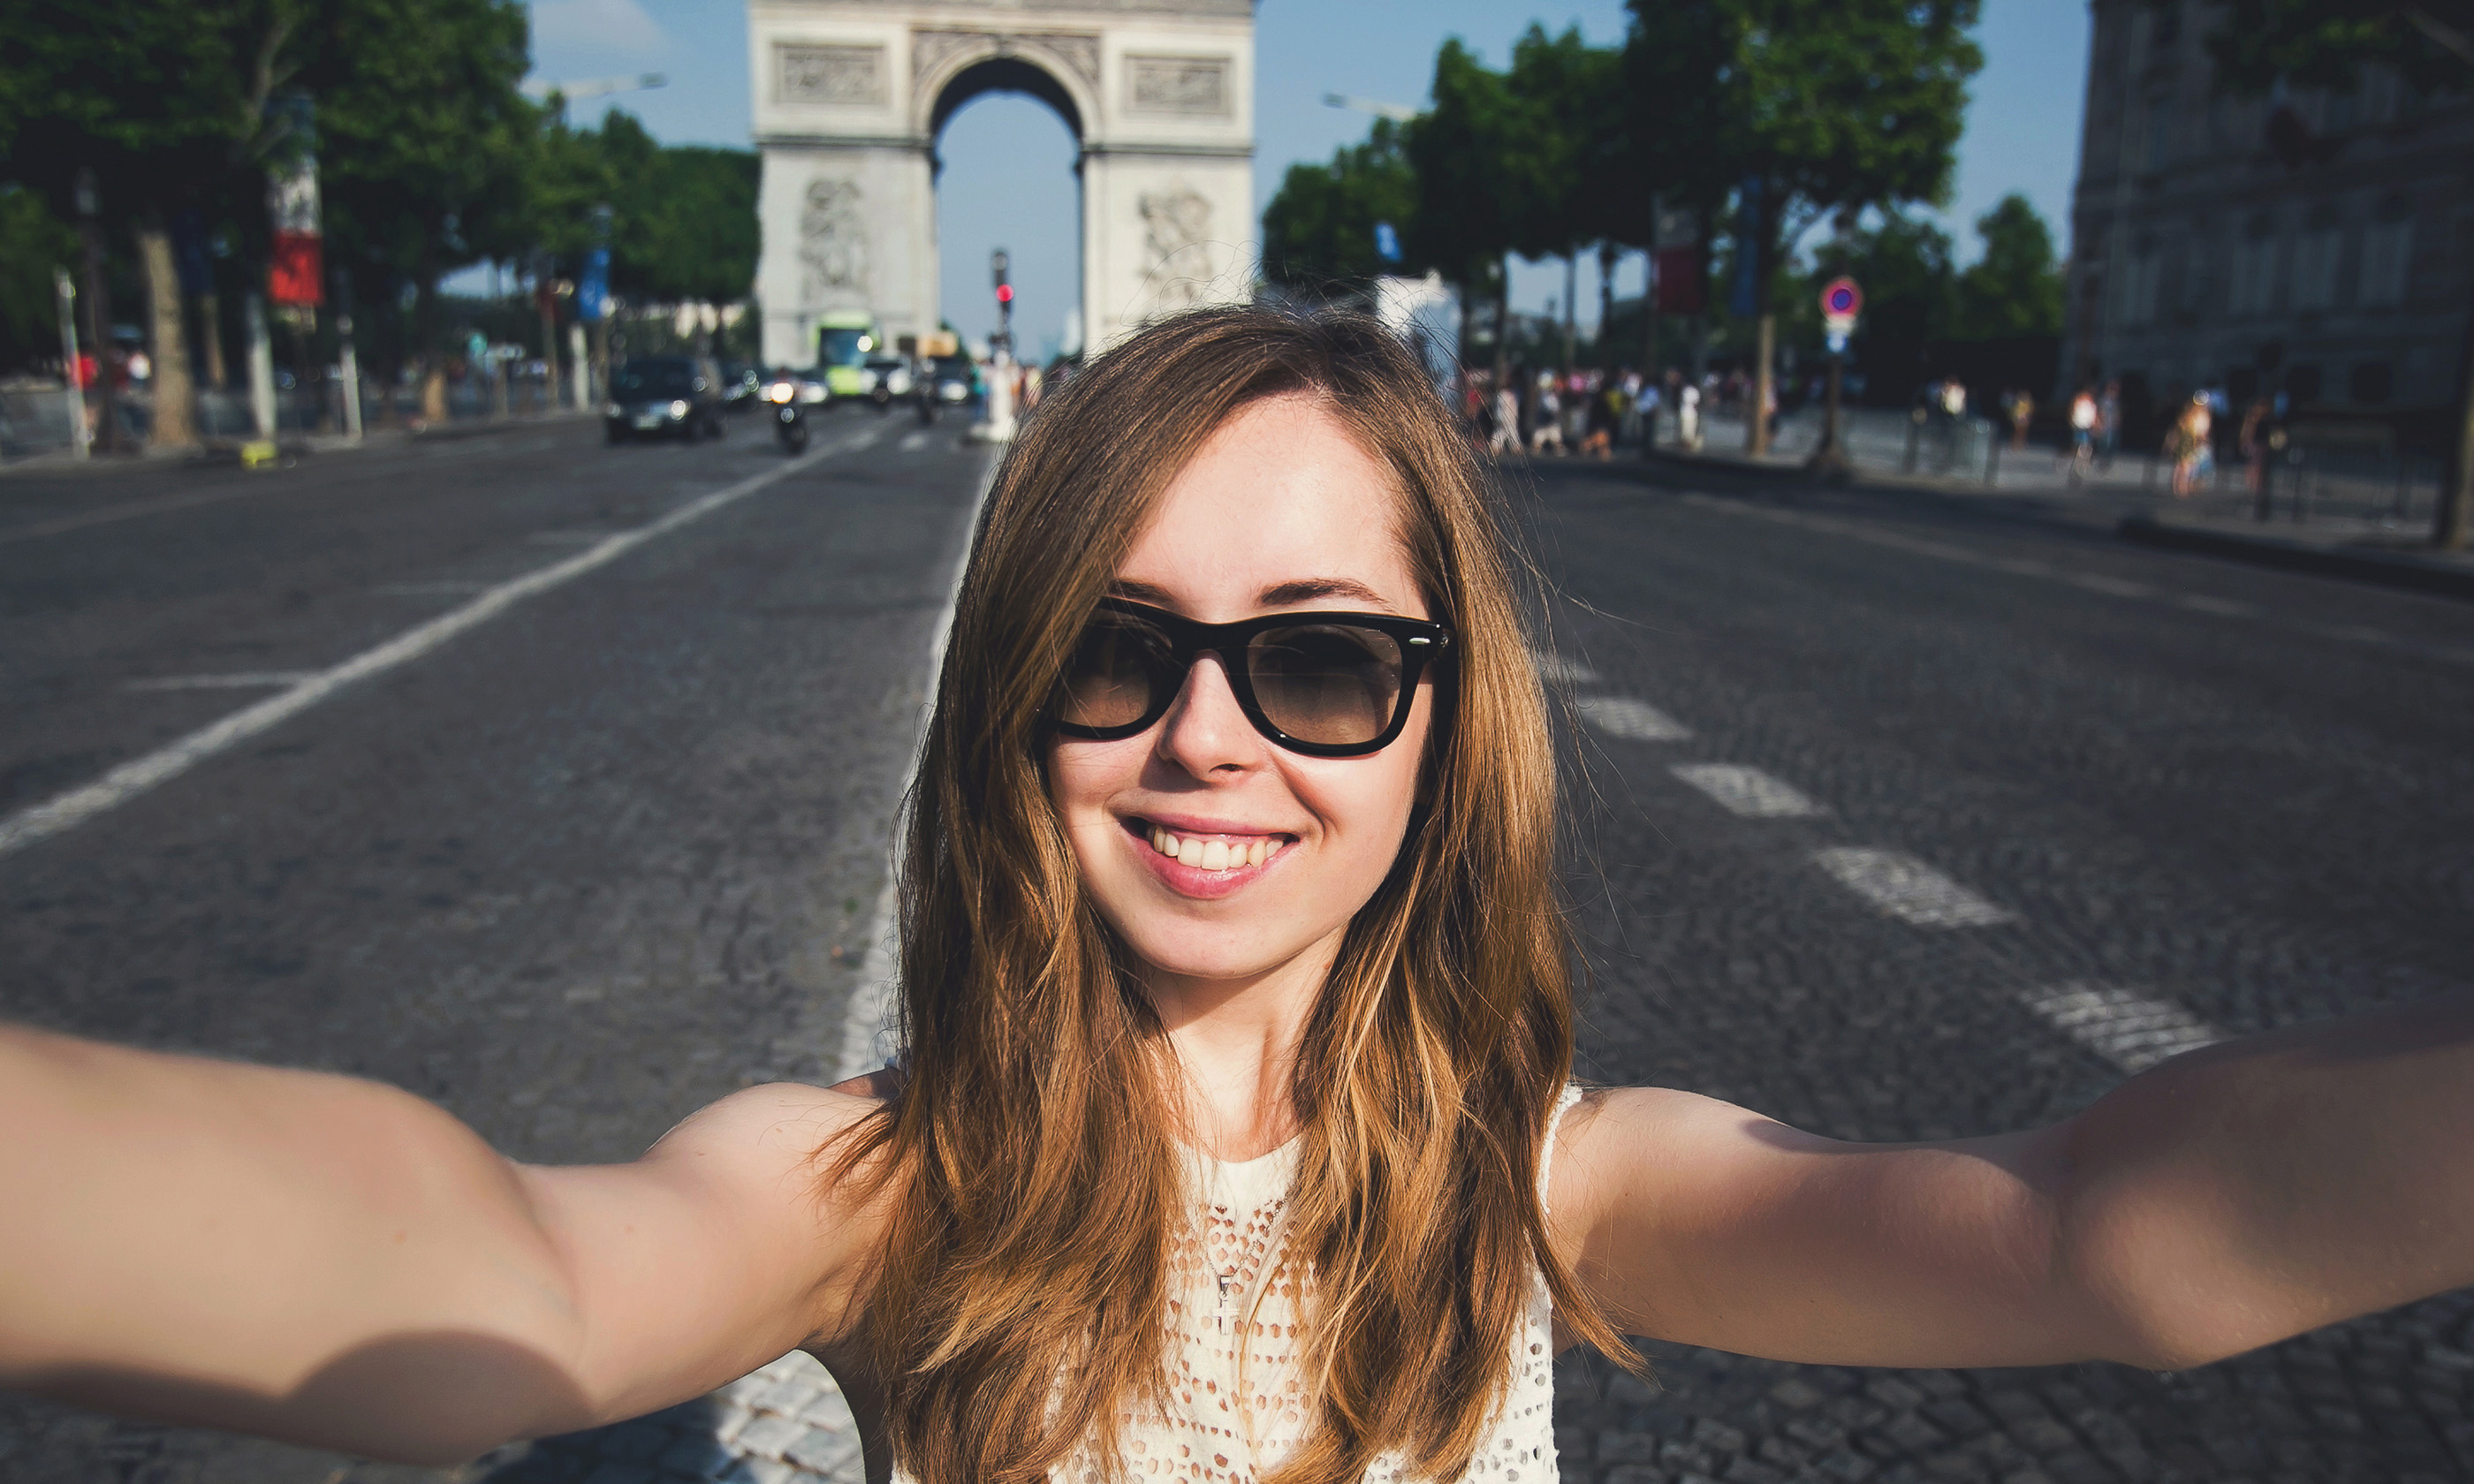 Teen taking a selfie in Paris (Shutterstock: see main credit below)